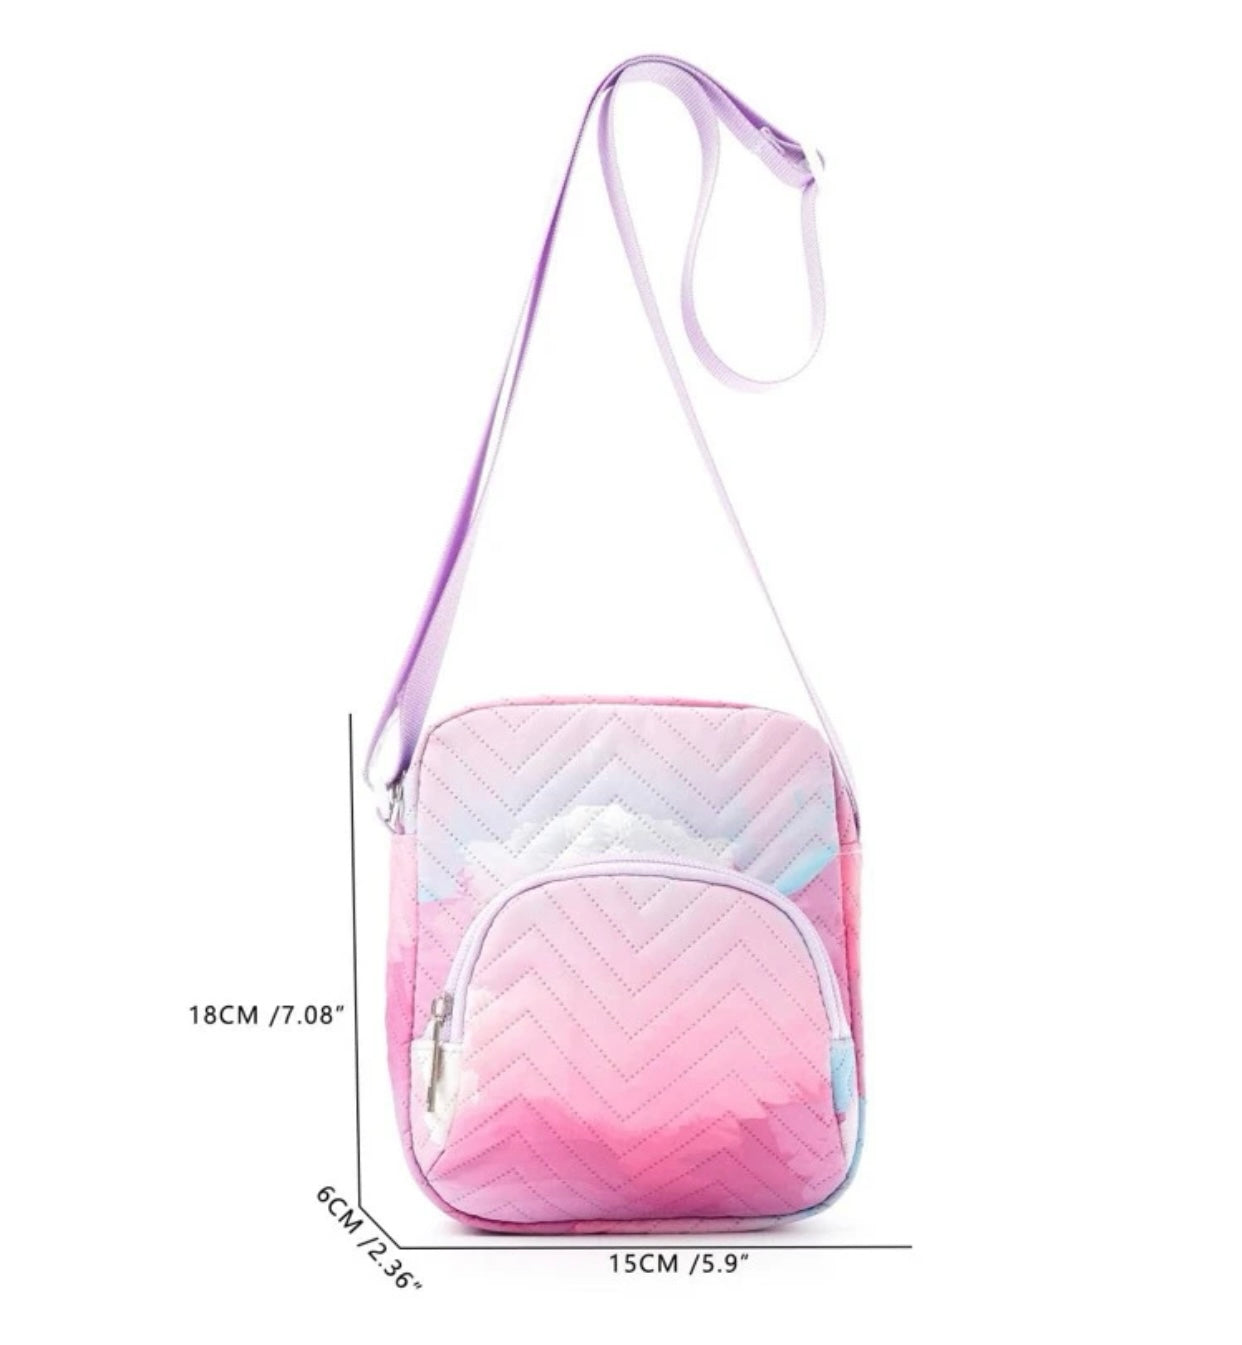 Kids Small Swirl Shoulder Bag, Pink & Purple, School, Toddler, Travel, Nursery